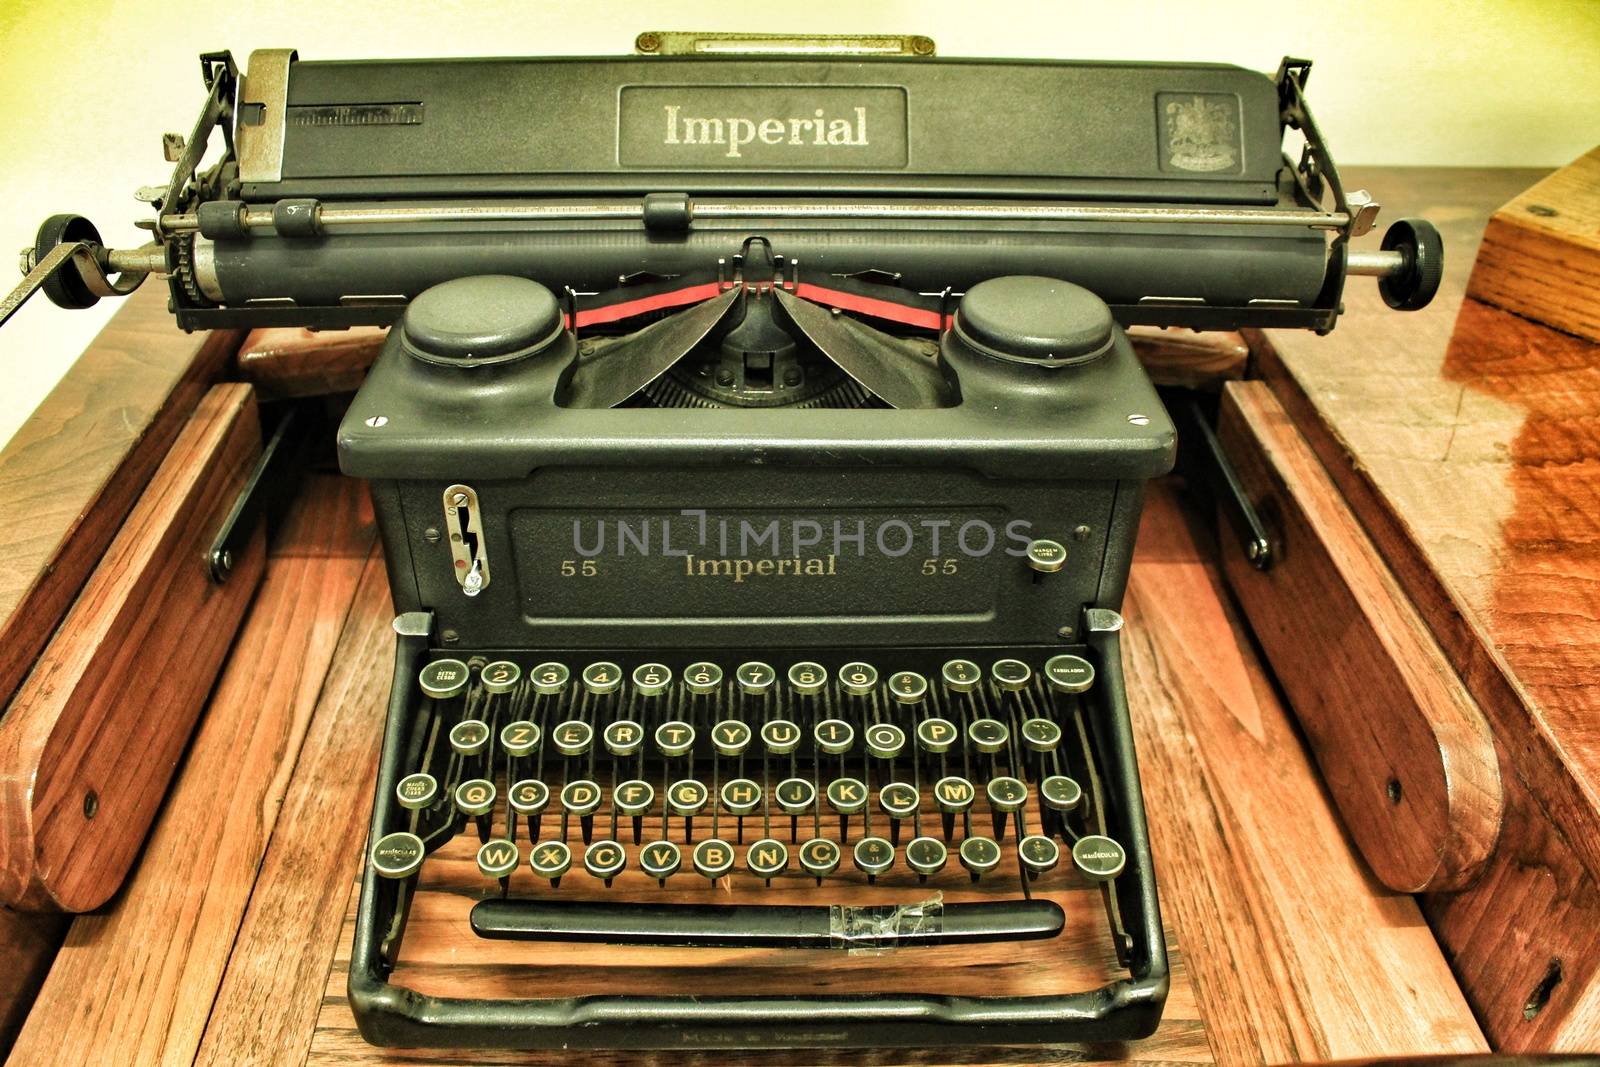 Old and beautiful vintage typewriter by soniabonet